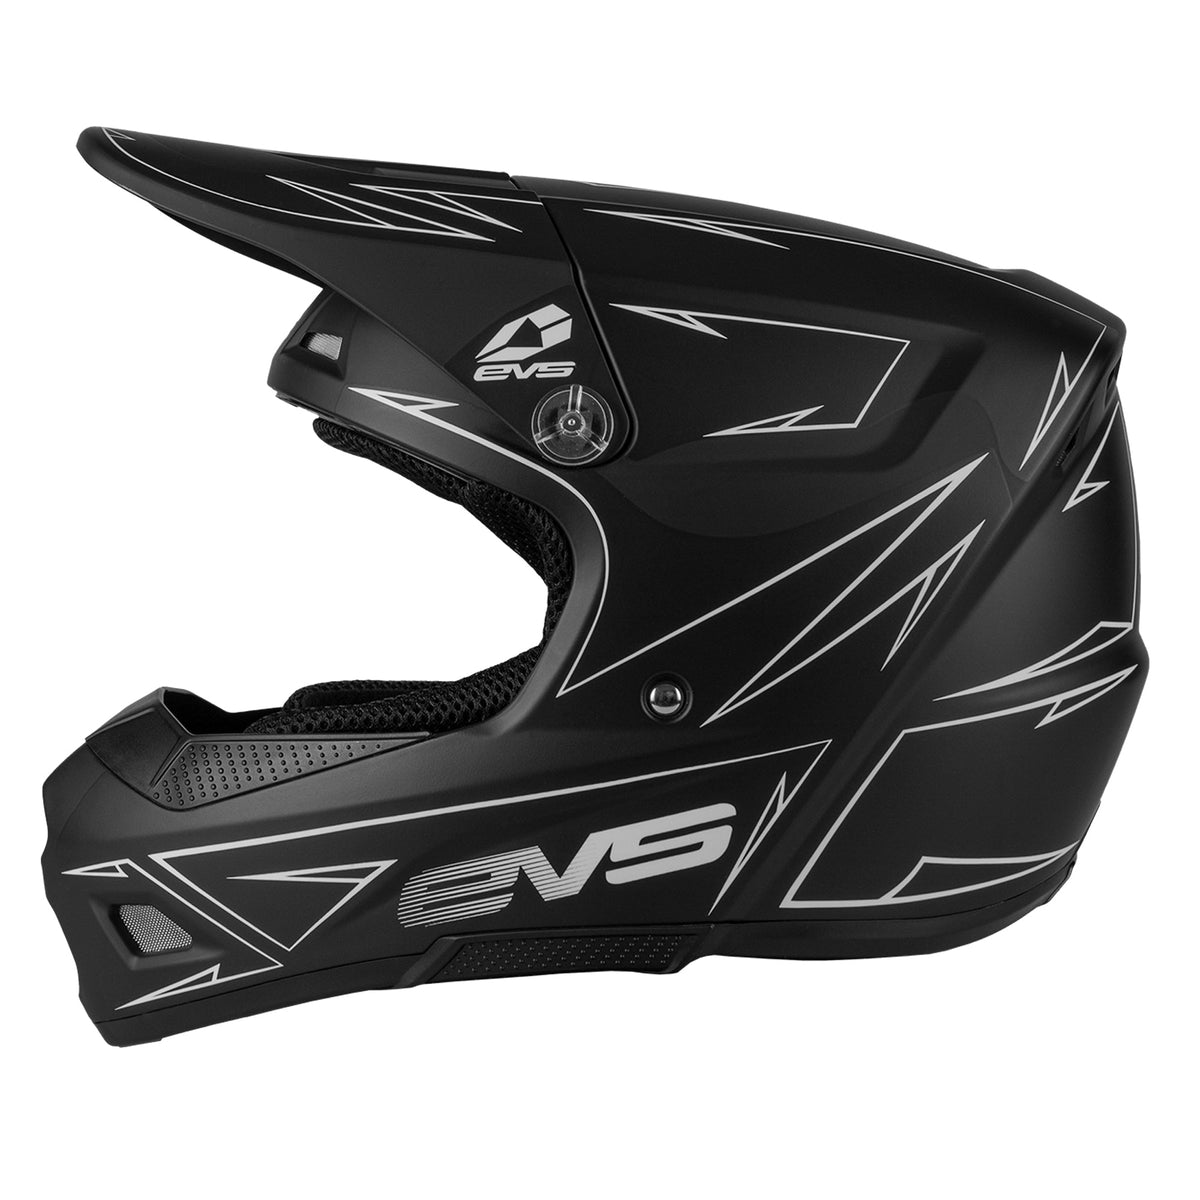 T3 Youth Helmet - Pinner Matte Black - EVS Sports